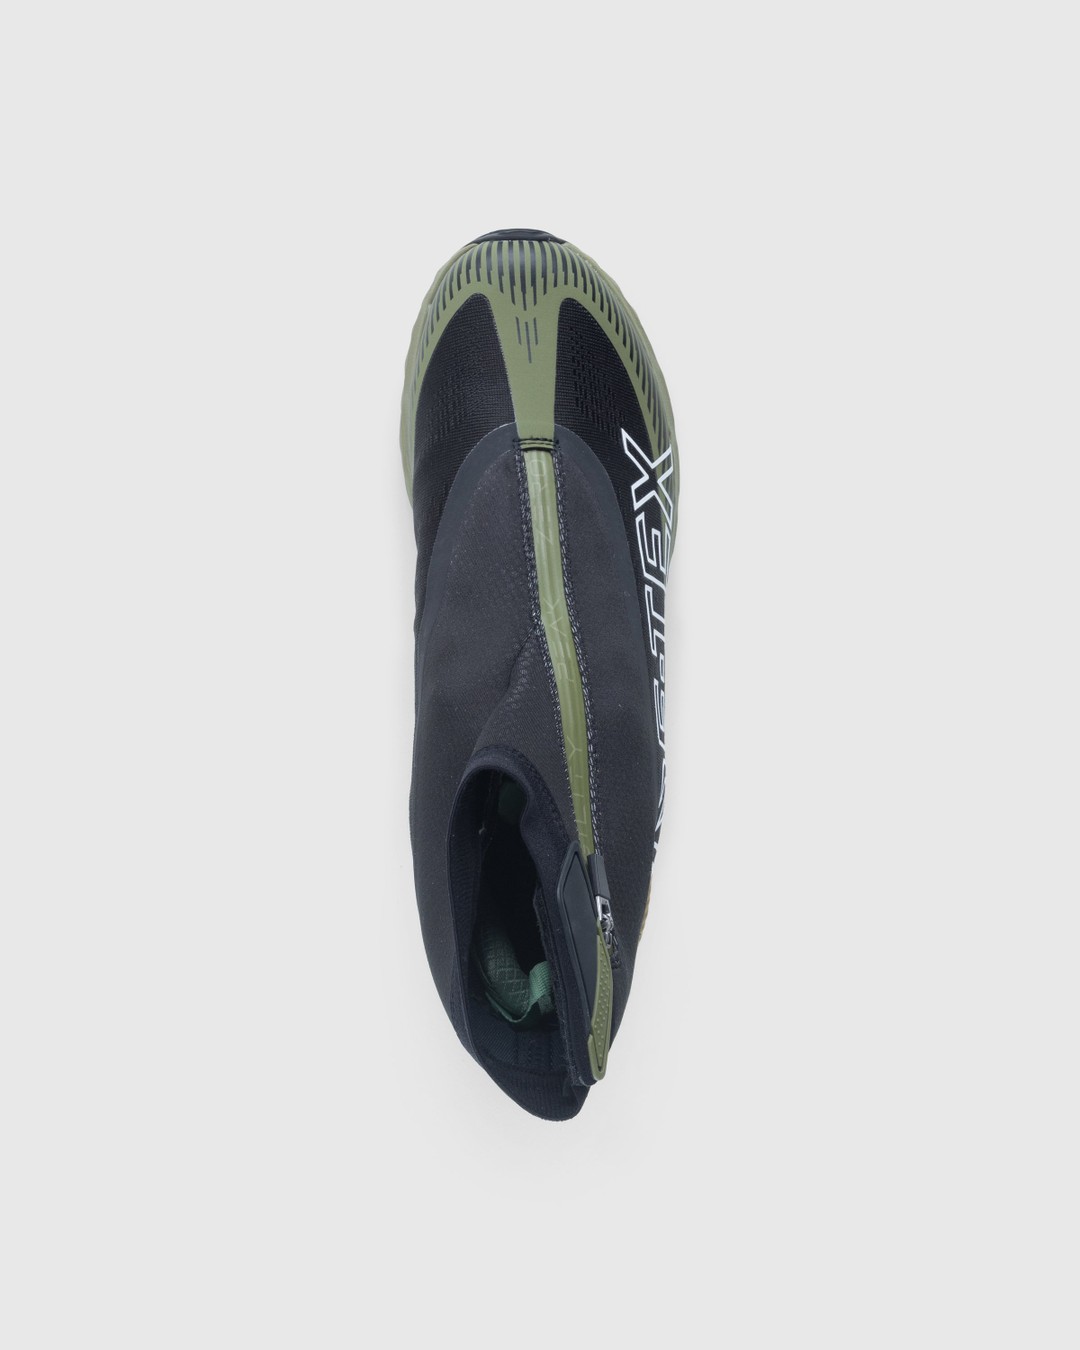 Merrell – Agility Peak 5 Zero GORE-TEX Black/Avocado - Sneakers - Multi - Image 5